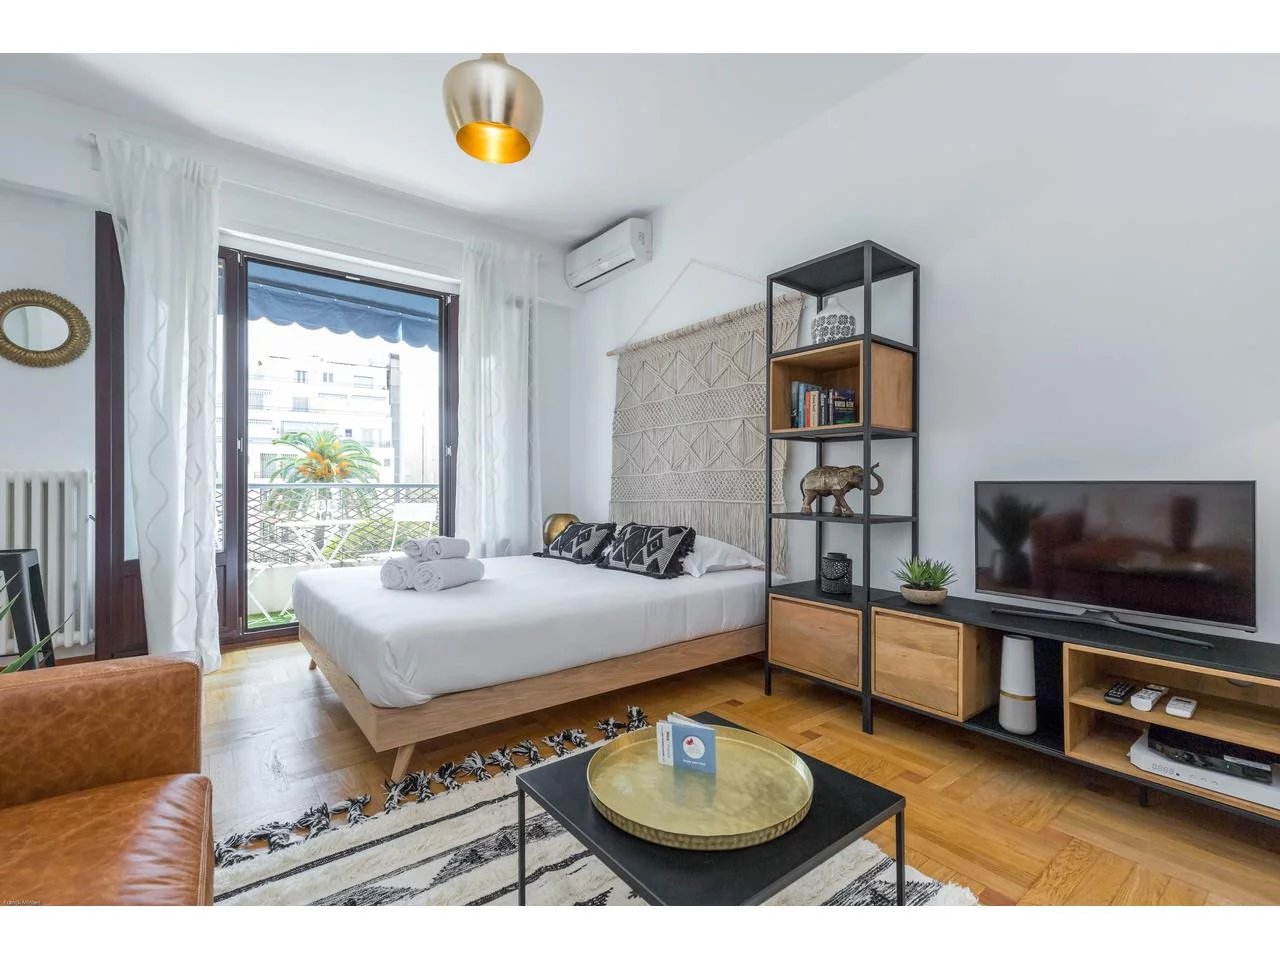 Appartement  1 Locali 28m2  In vendita   265 000 €